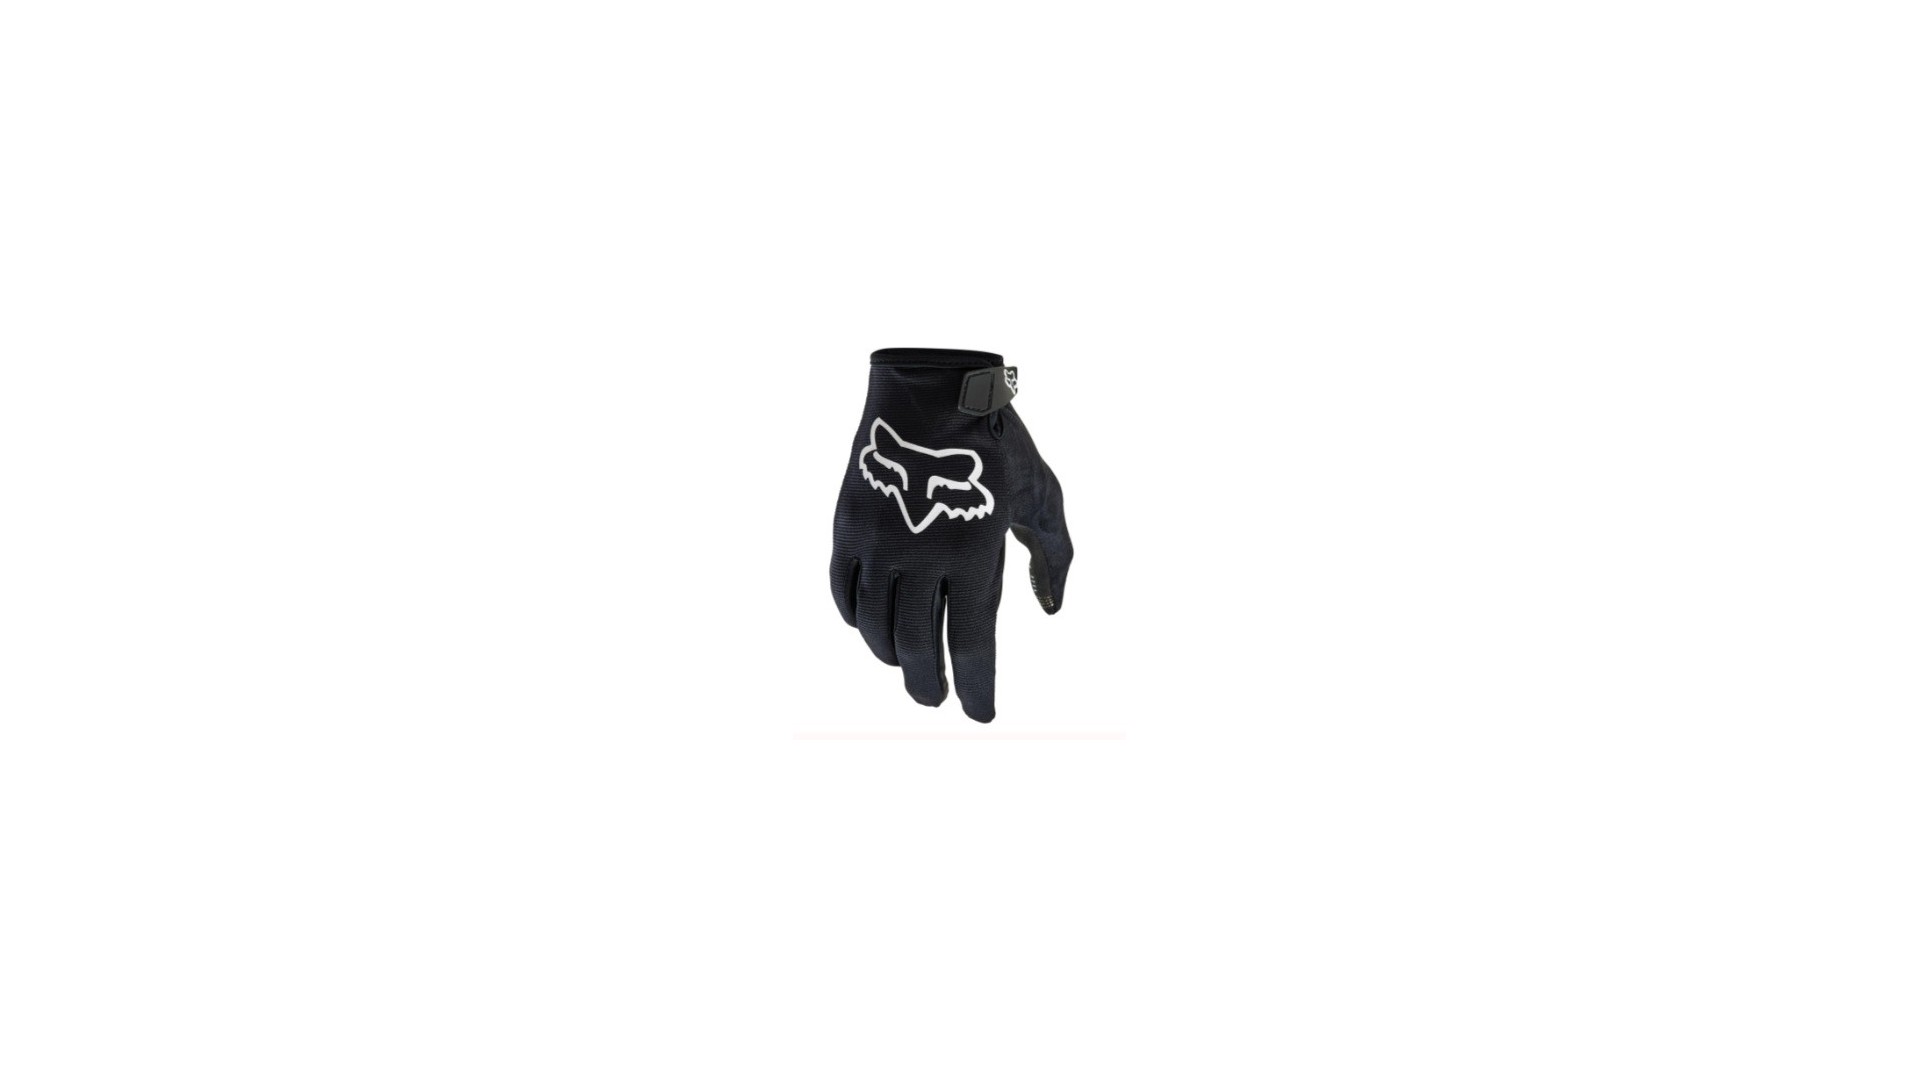 Rękawiczki Fox Ranger czarne r.XL - 27162_001_XL